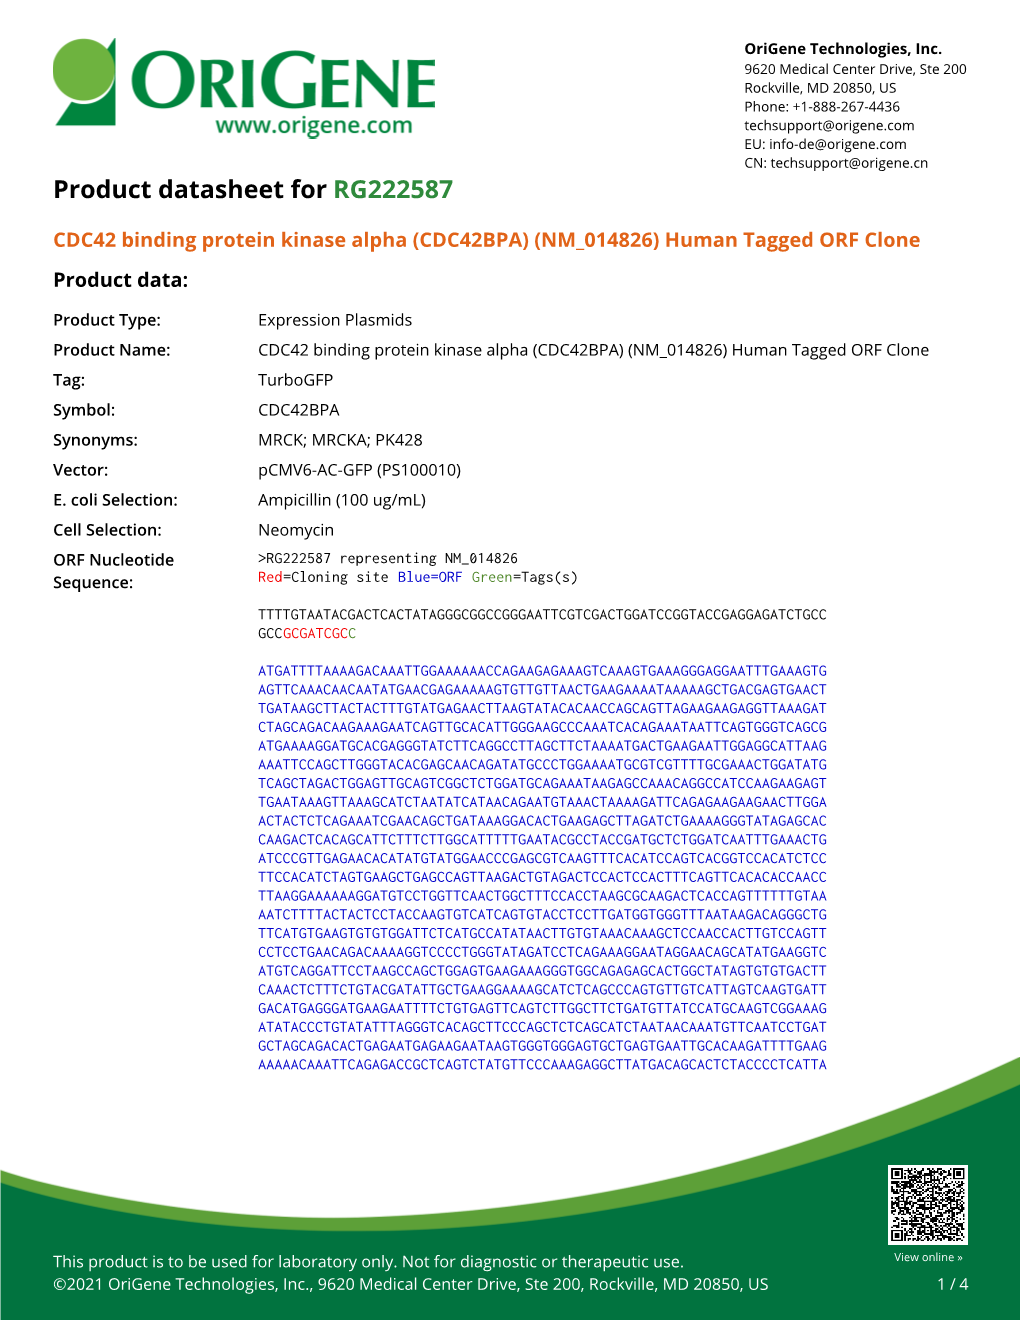 CDC42 Binding Protein Kinase Alpha (CDC42BPA) (NM 014826) Human Tagged ORF Clone Product Data